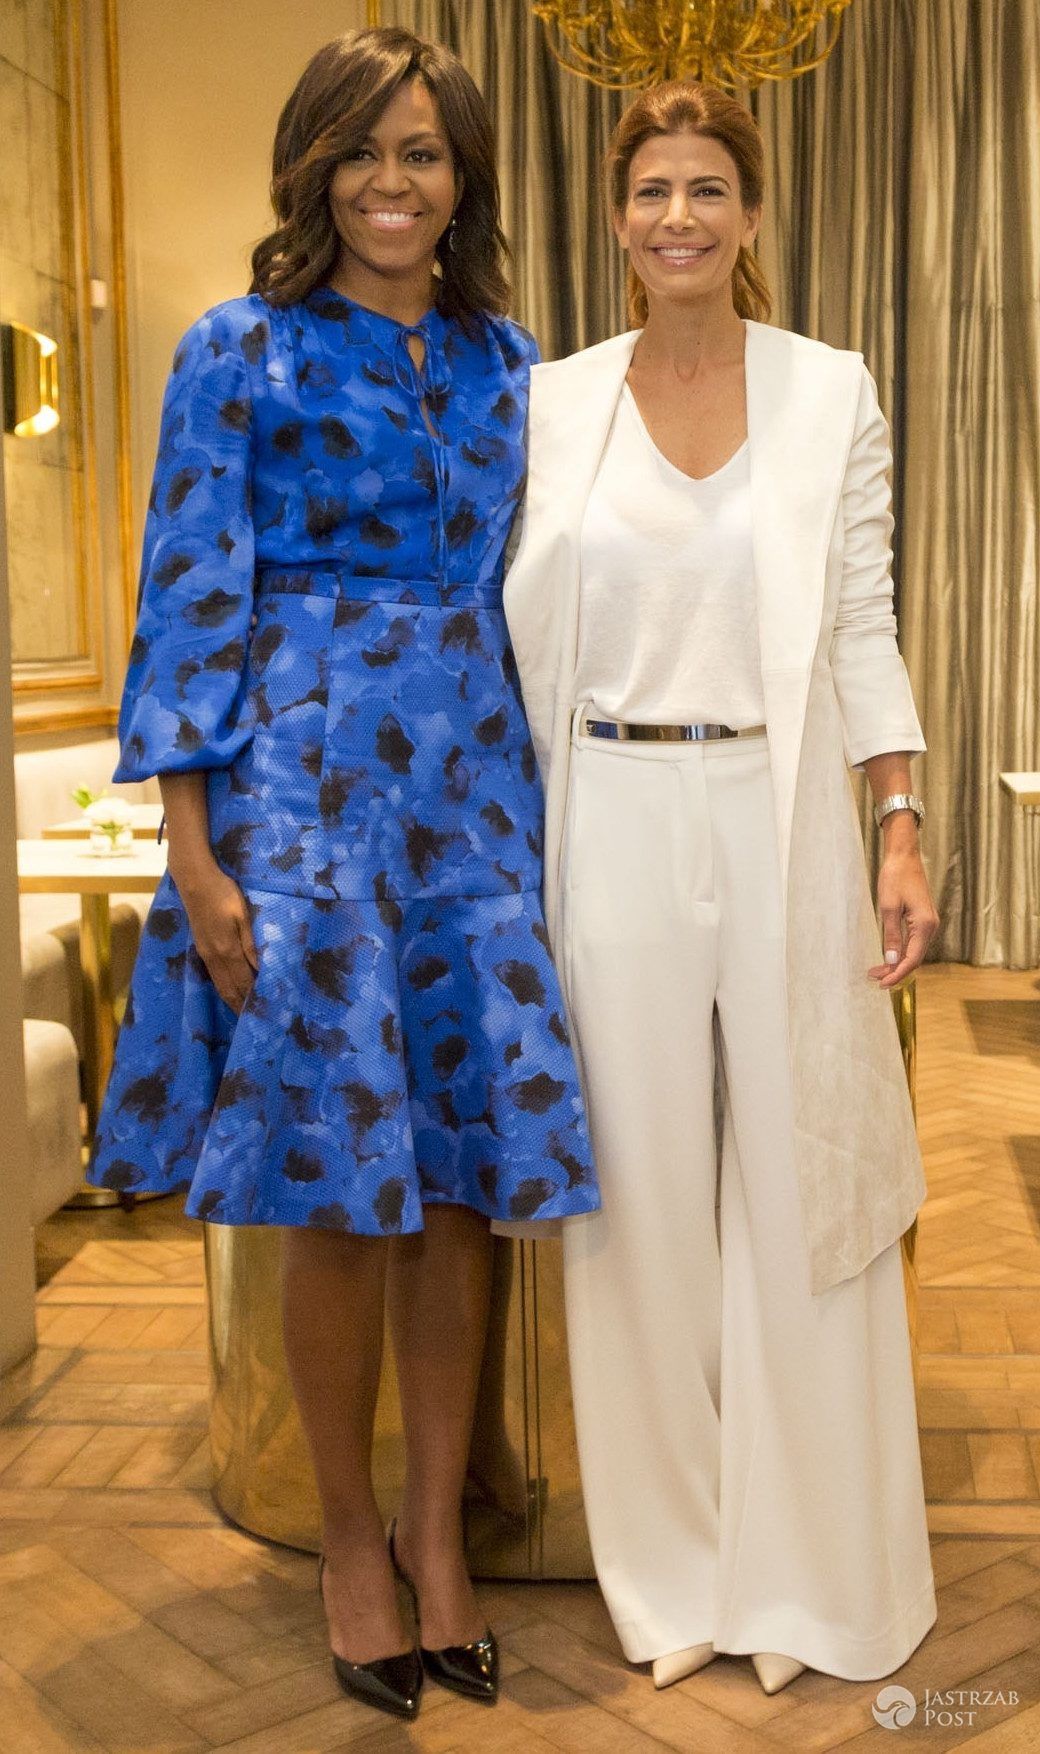 Michelle Obama i Juliana Awada, żona prezydenta Argentyny (fot. ONS)